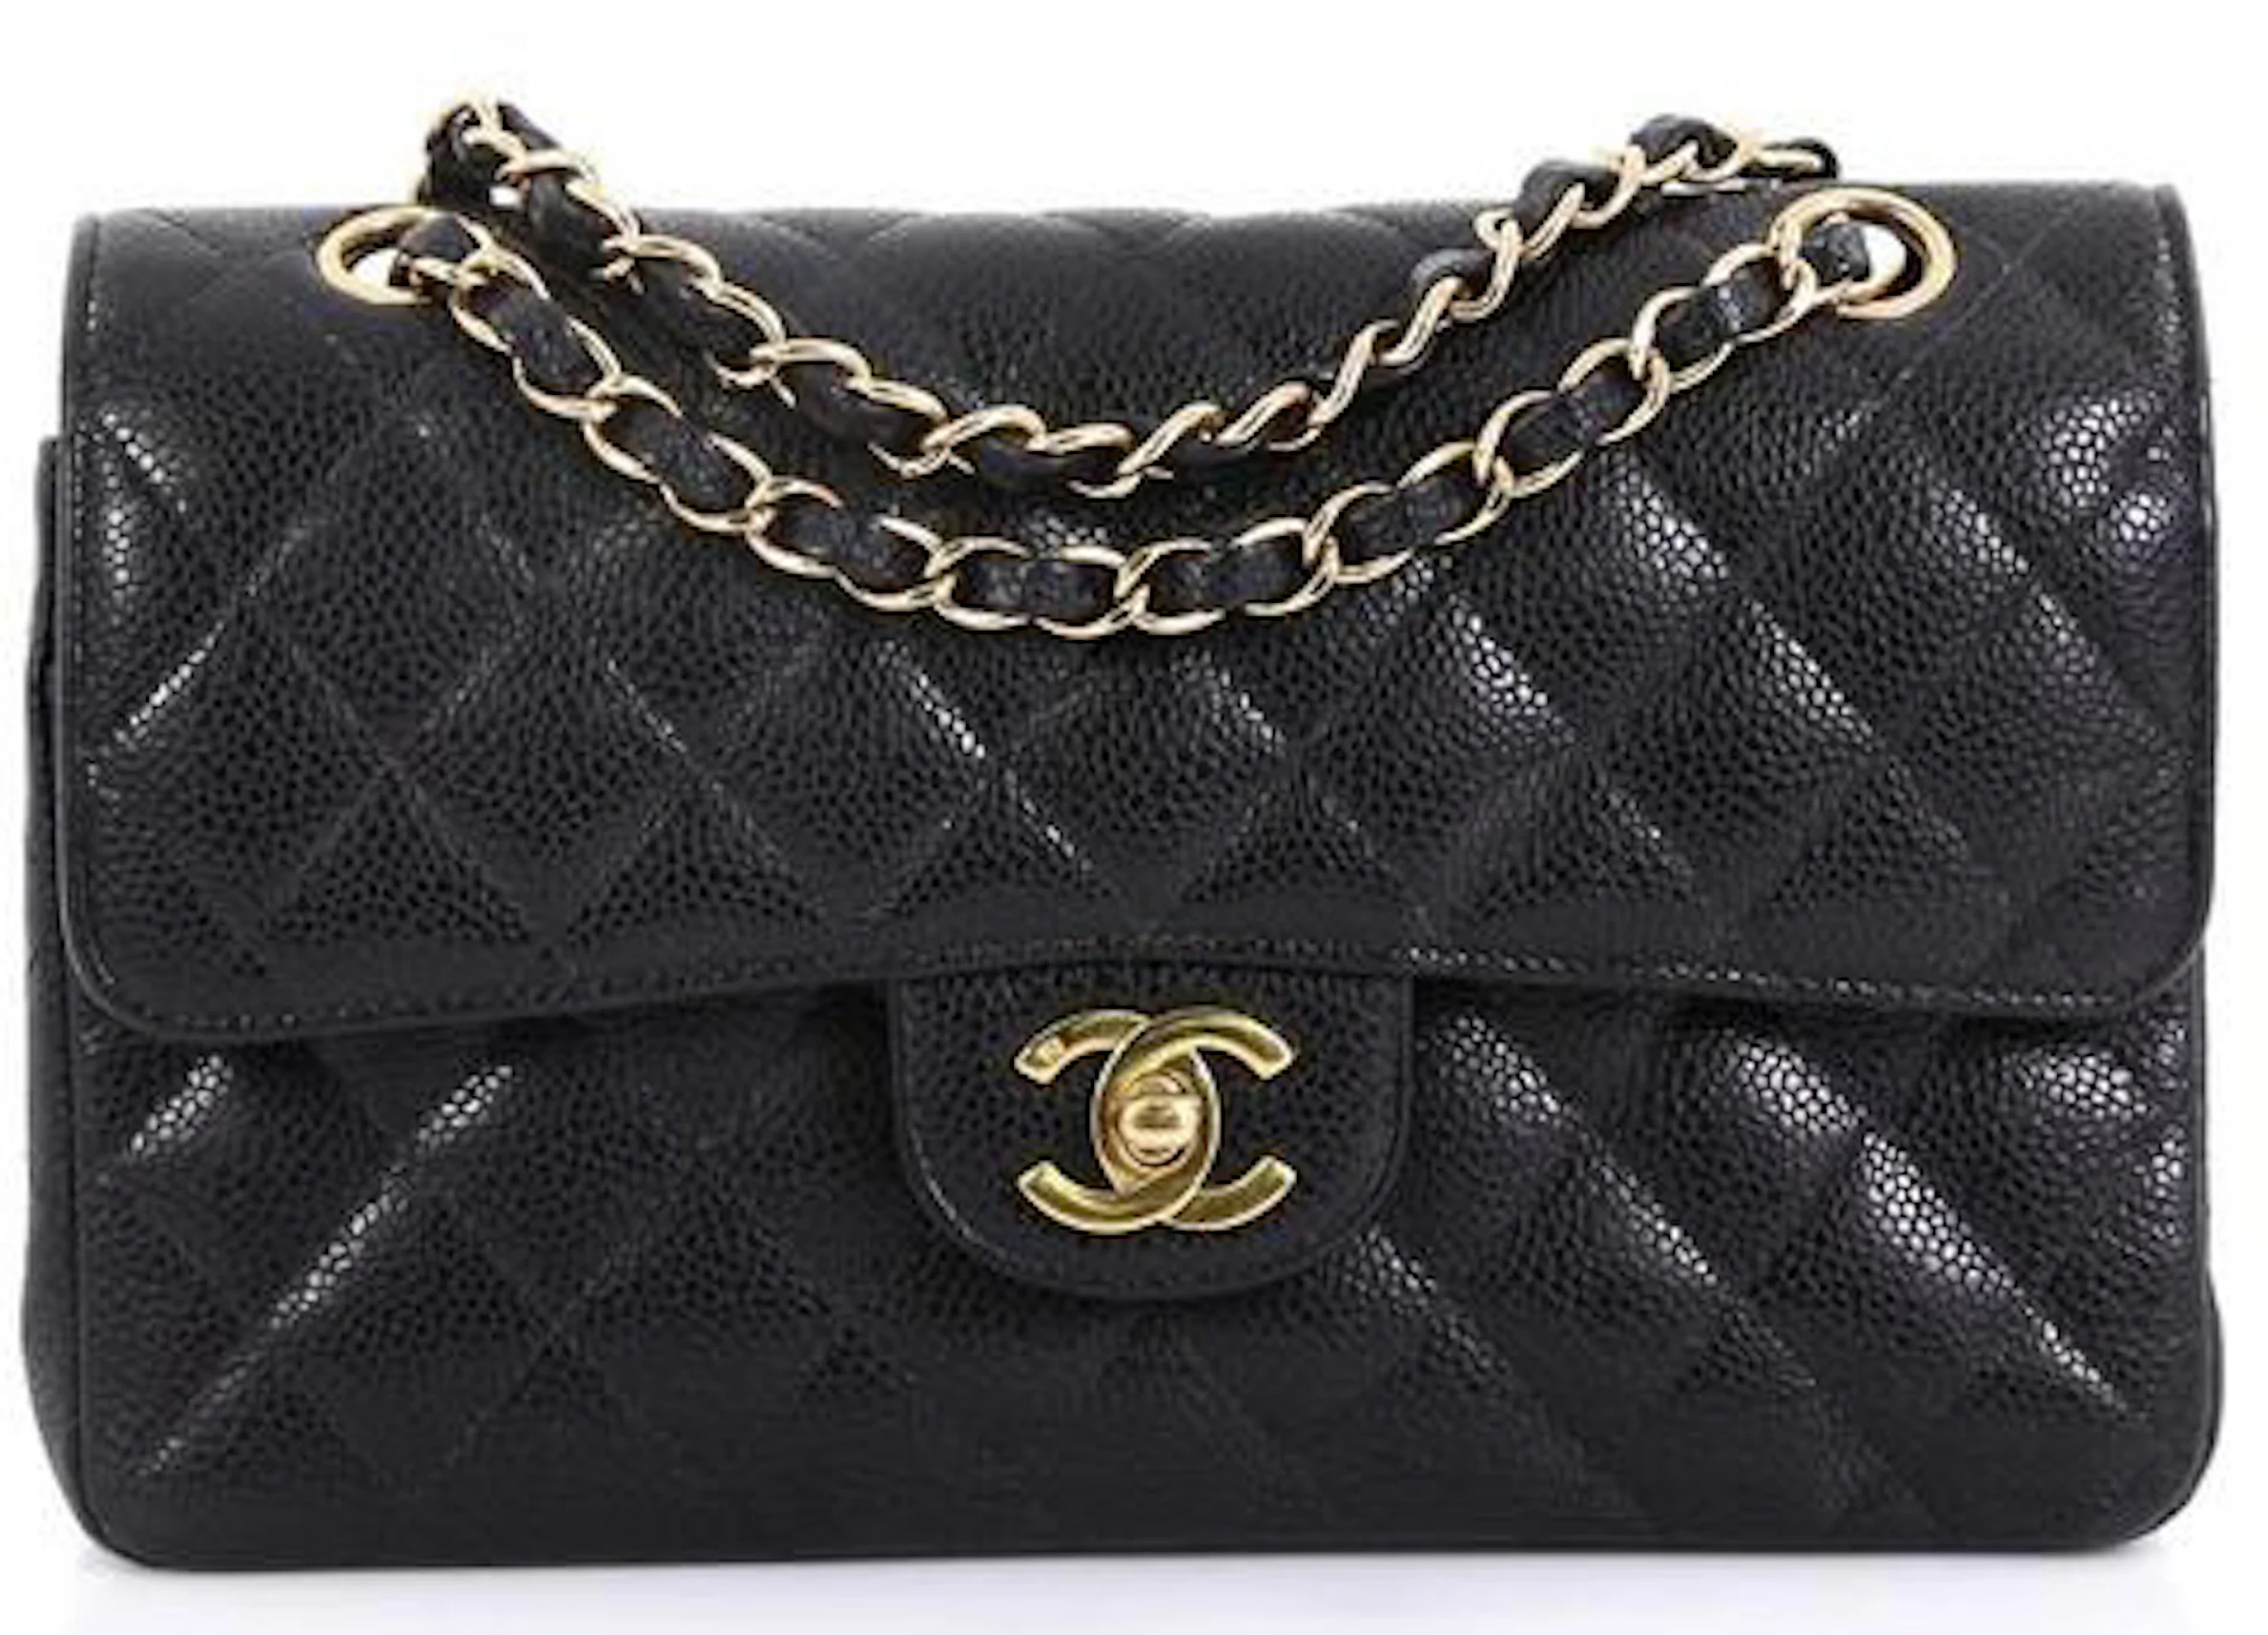 Bolsa Chanel Original Classic Double Flap Small Preta Feminina